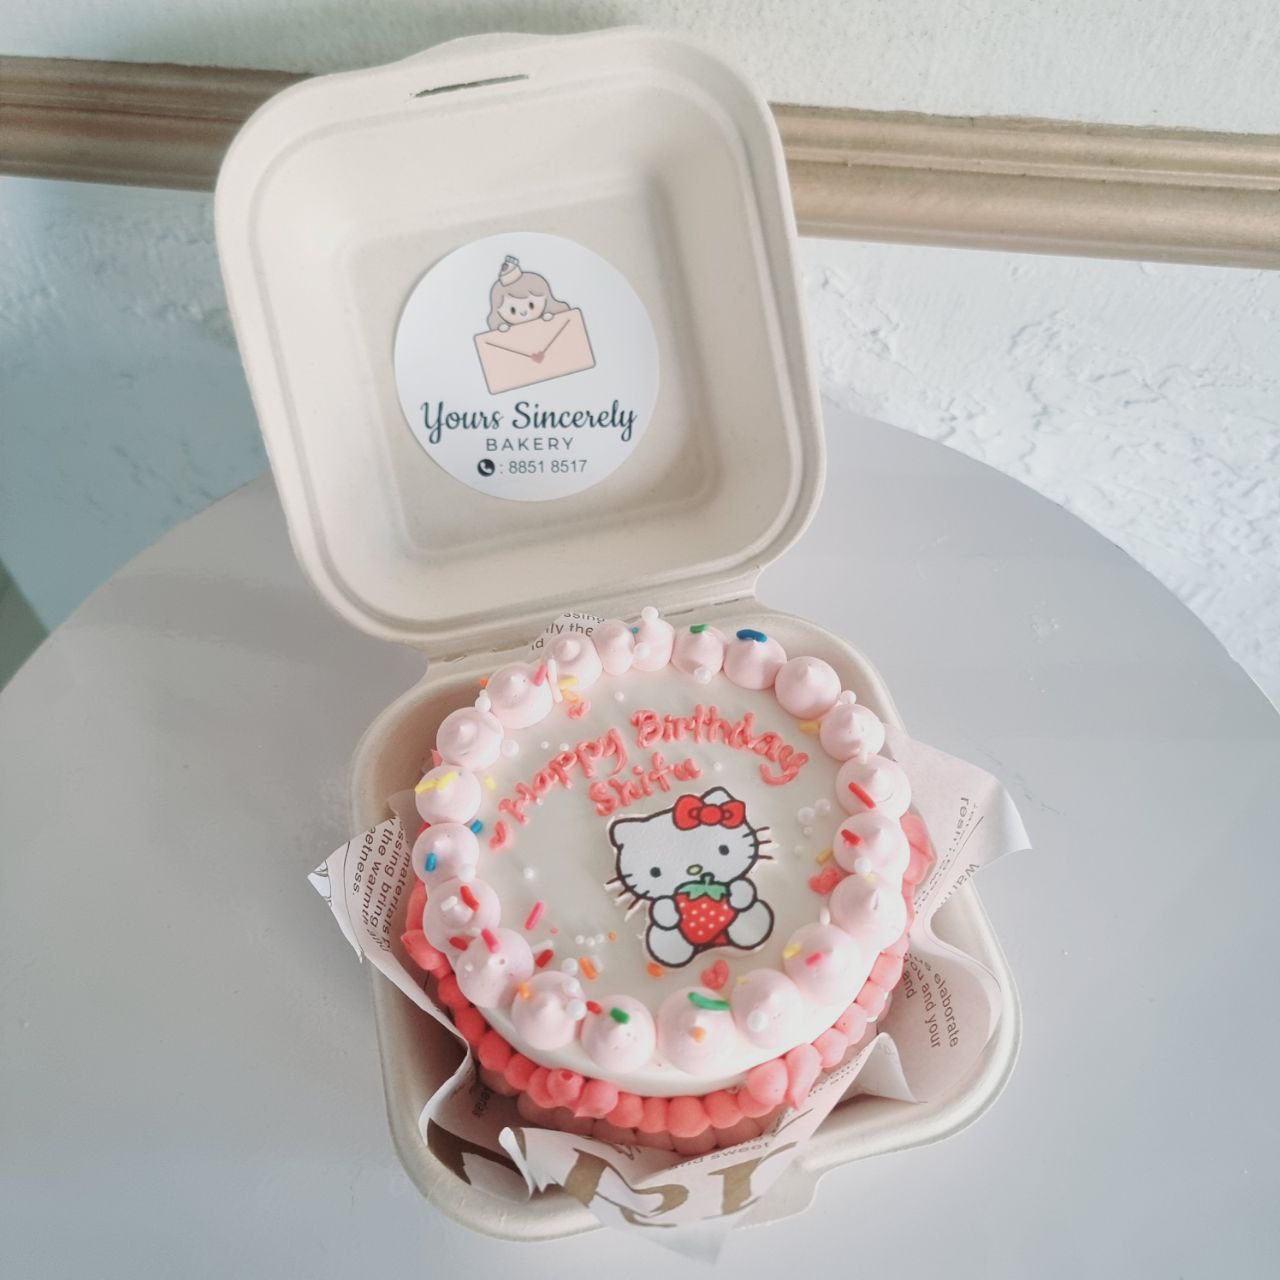 Hello Kitty Birthday Cake delivered